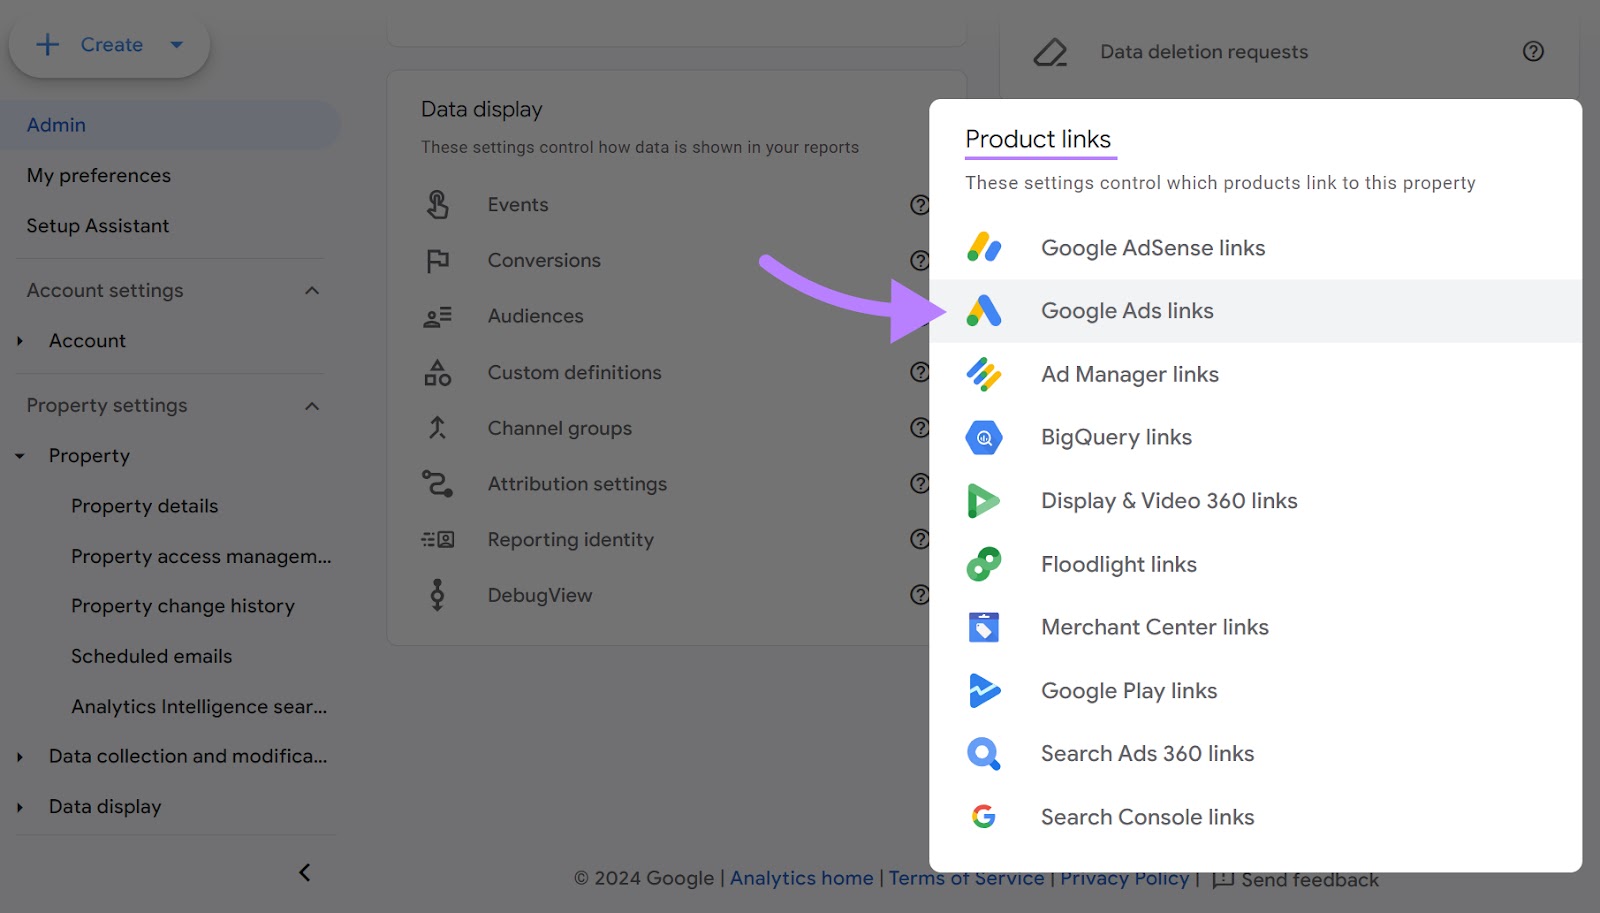 “Google Ads links" selected under "Product links" drop-down menu